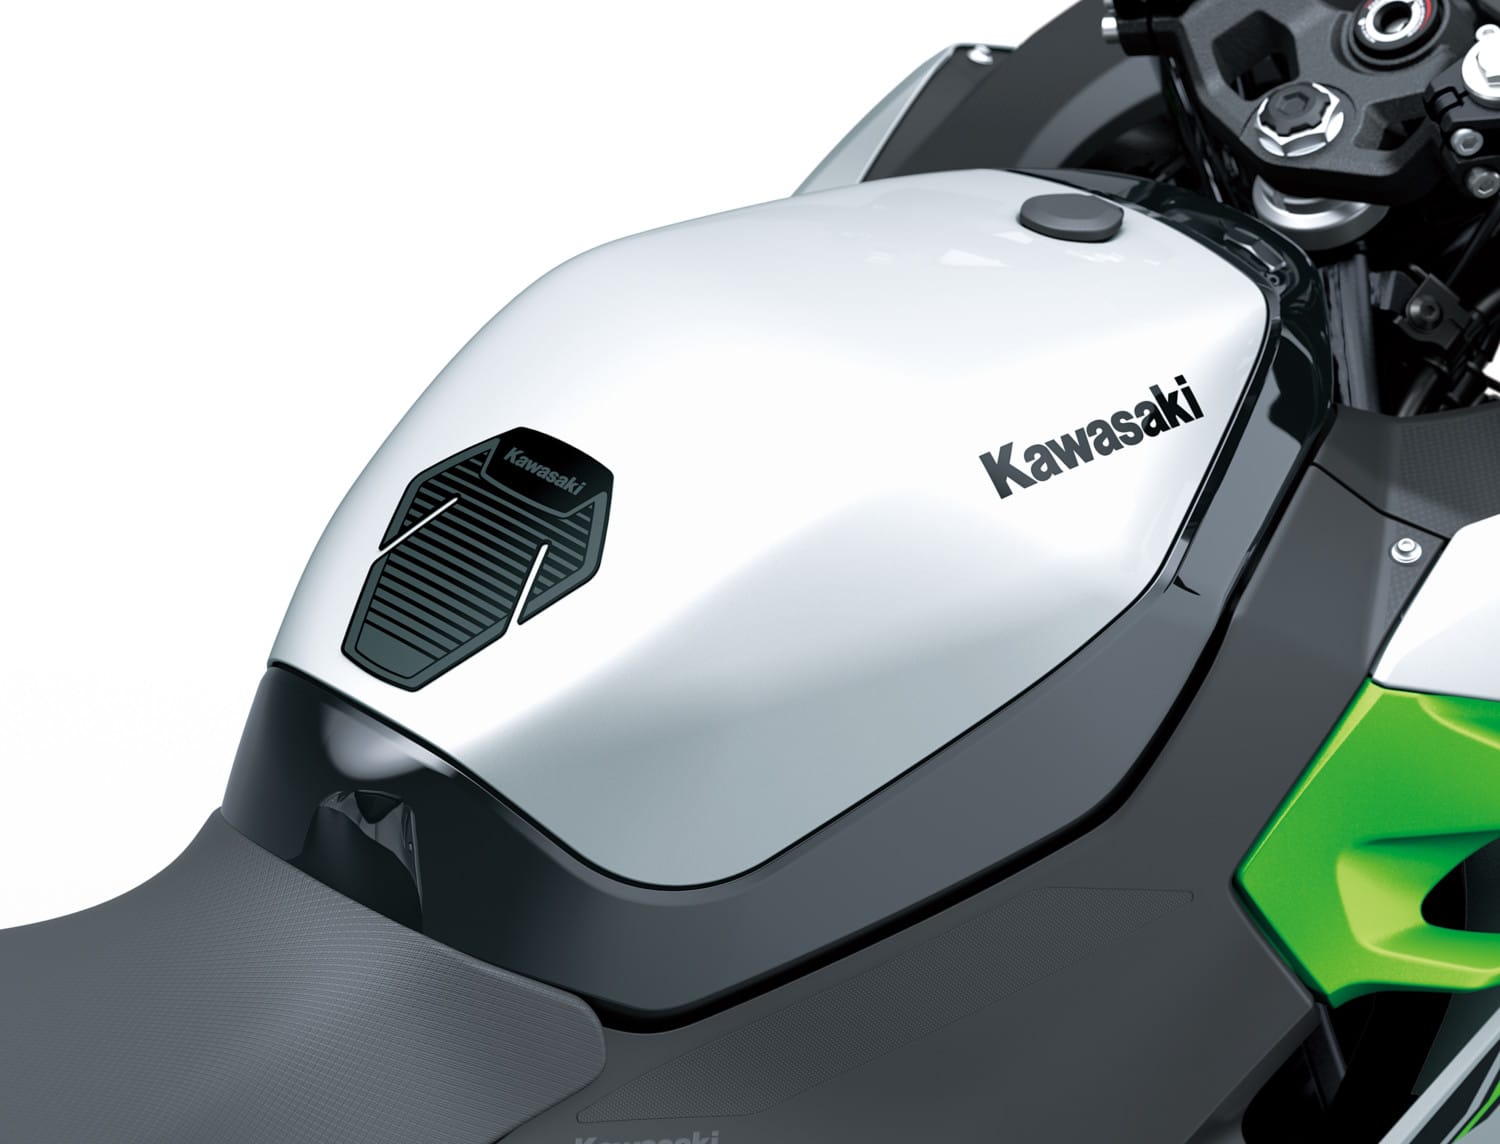 Alt du skal vide om de to elektriske Kawasaki modeller